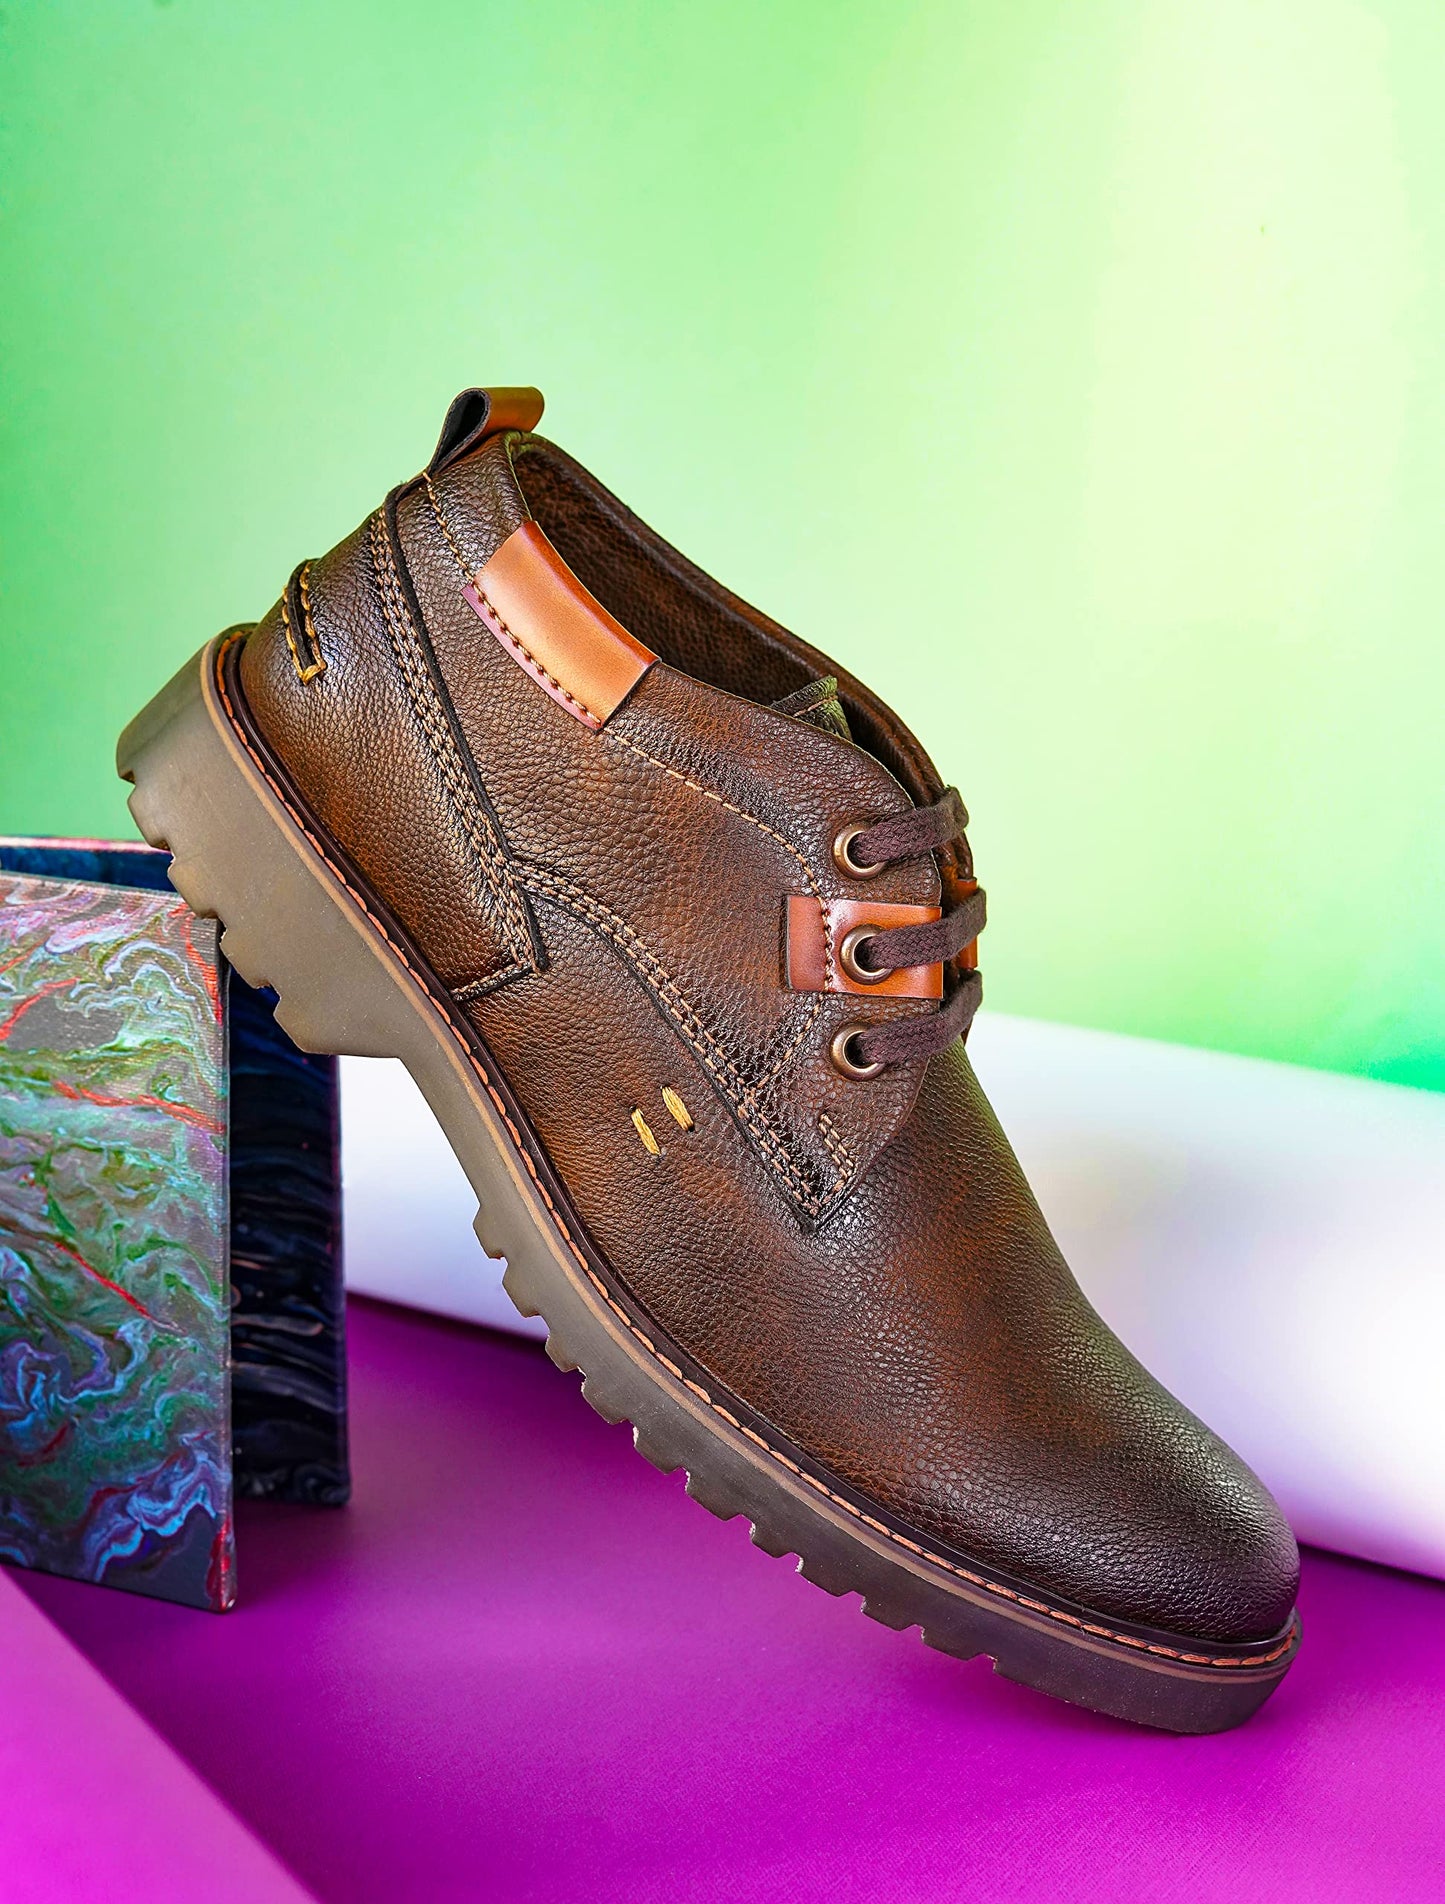 Buckaroo Jaripeo Delmar Premium Vegan Synthetic Tan Casual Shoes for Men's - 8 UK 